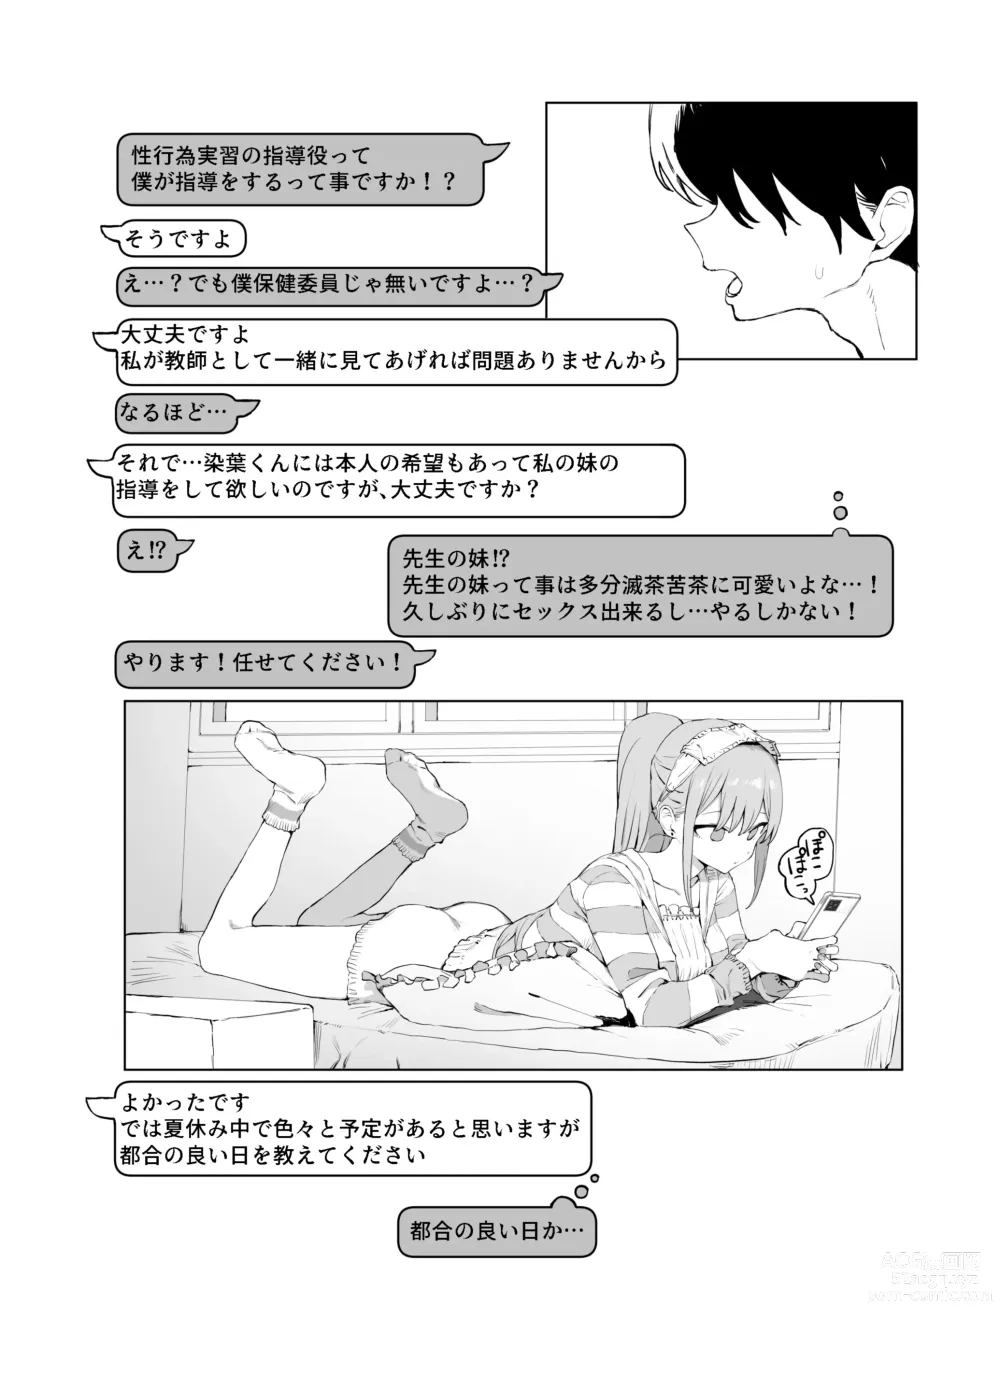 Page 4 of doujinshi Seikoui Jisshuu 2